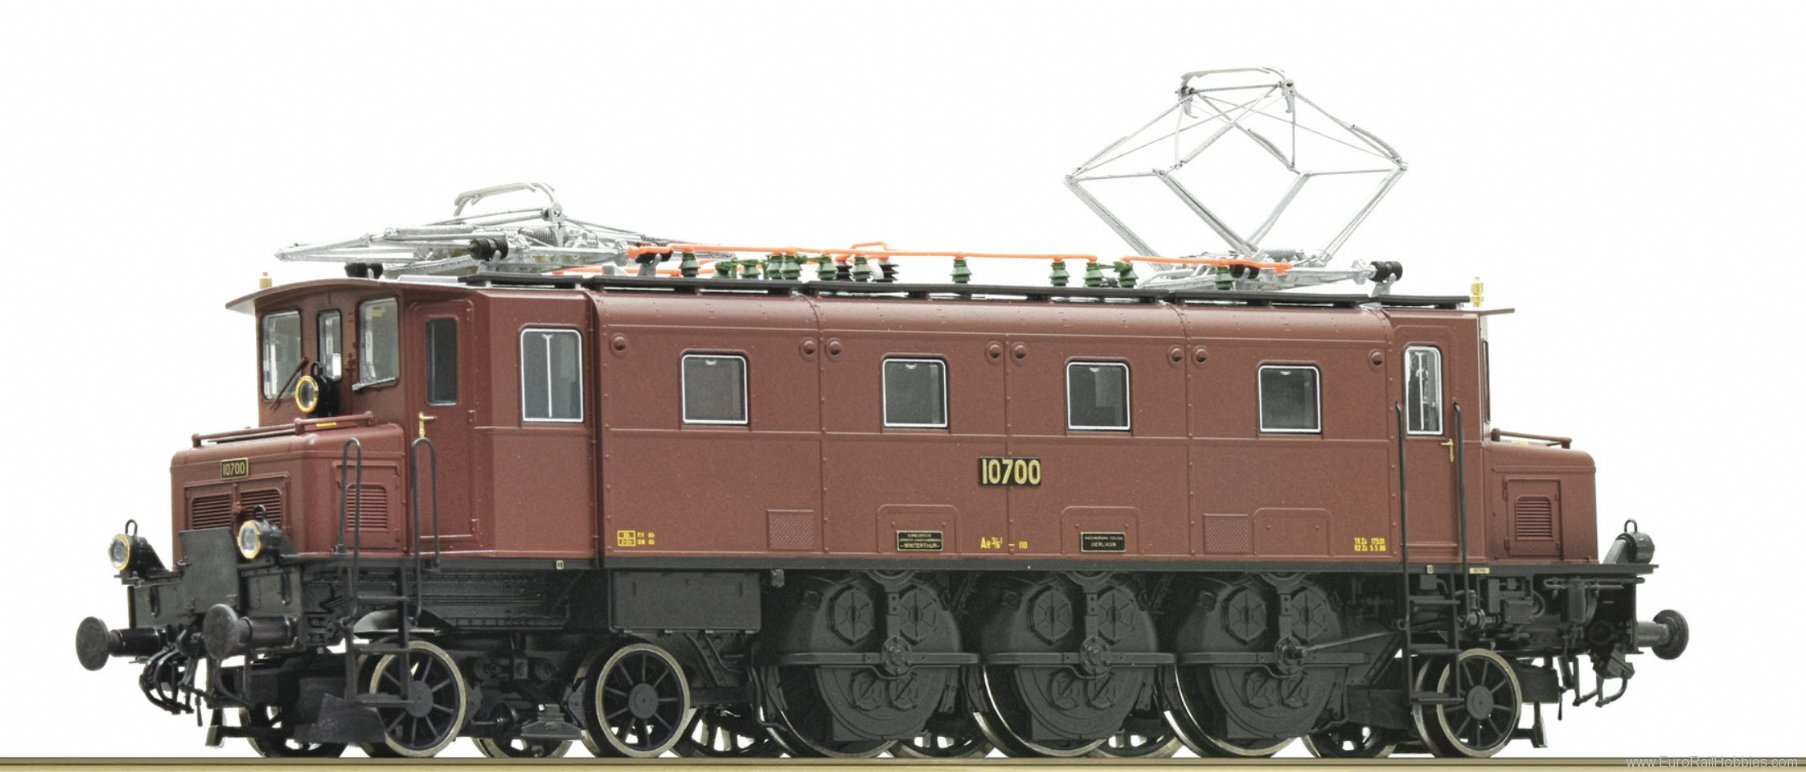 Roco 70090 SBB Electric locomotive Ae 3/6Ë¡ 10700, (Co